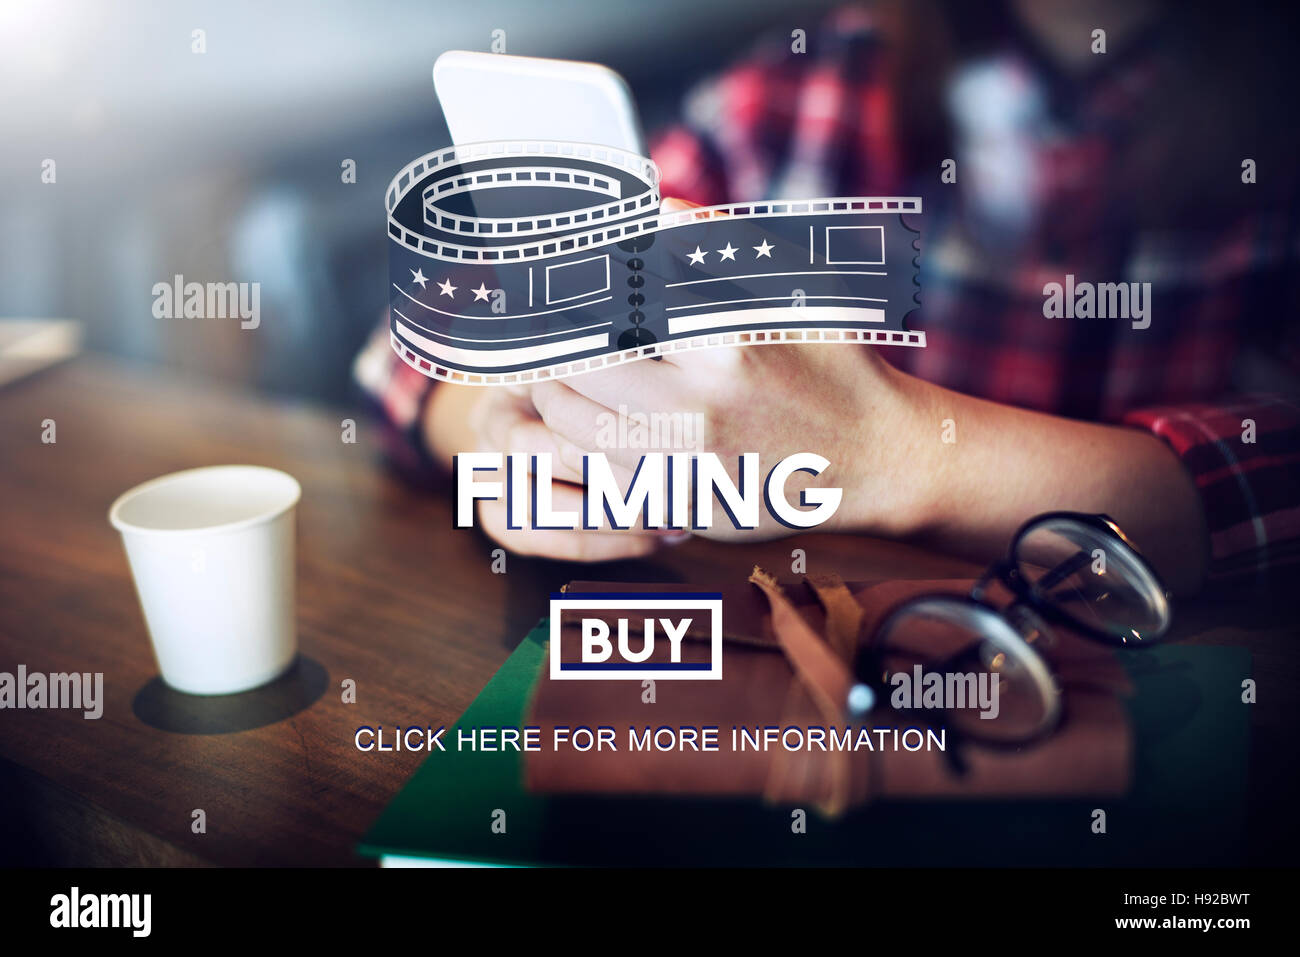 Filming Cinema Media Movie Production Studio Concept Stock Photo